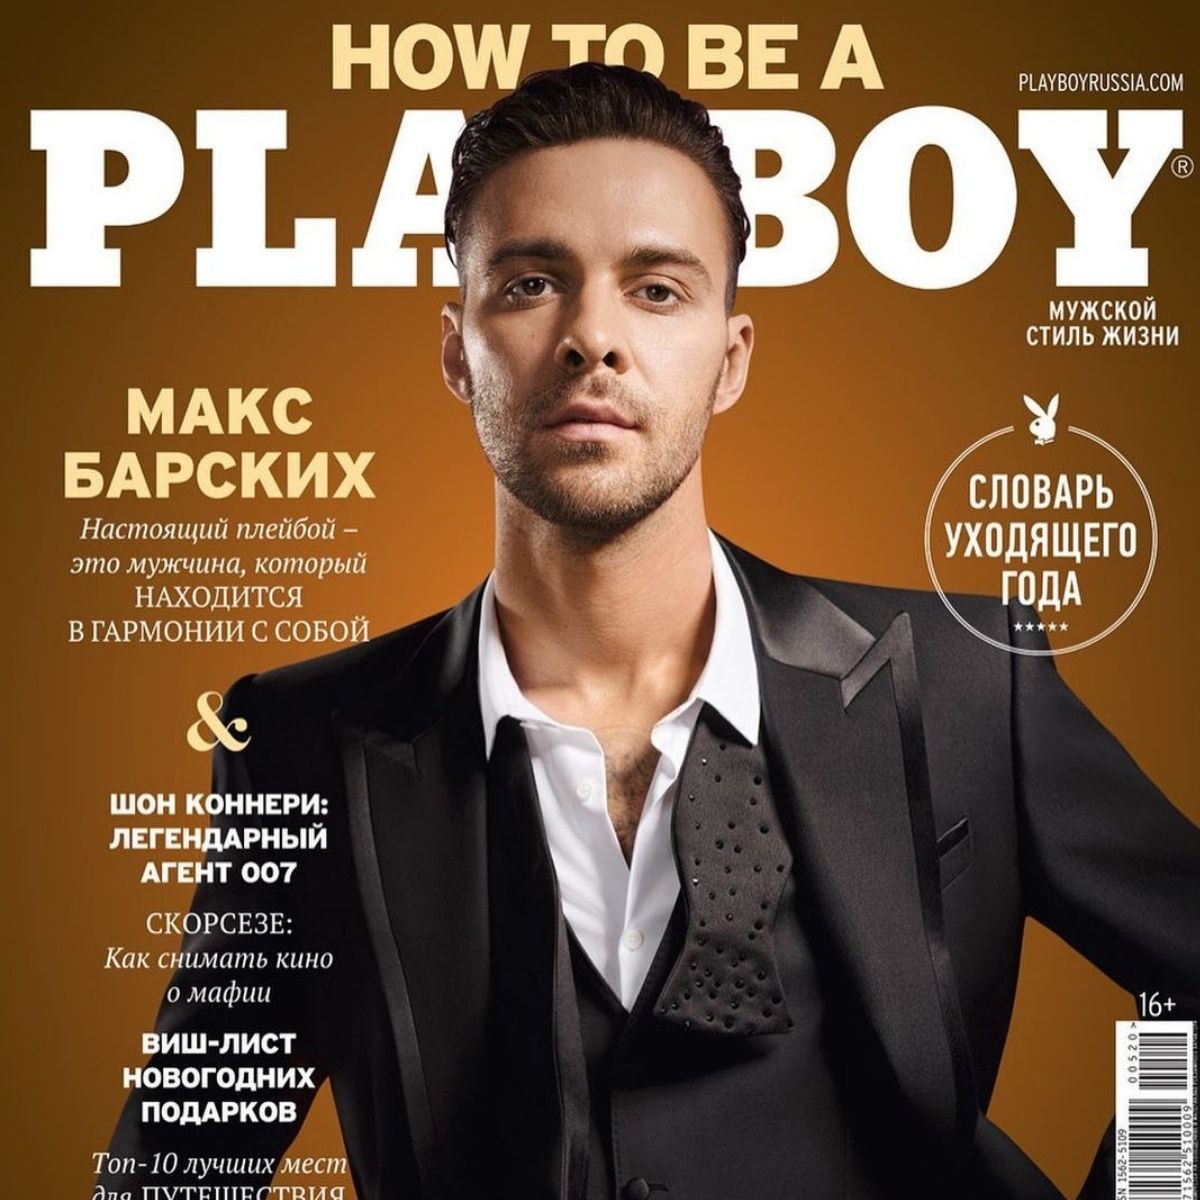 Макс Барских на обложке журнала «PLAYBOY»